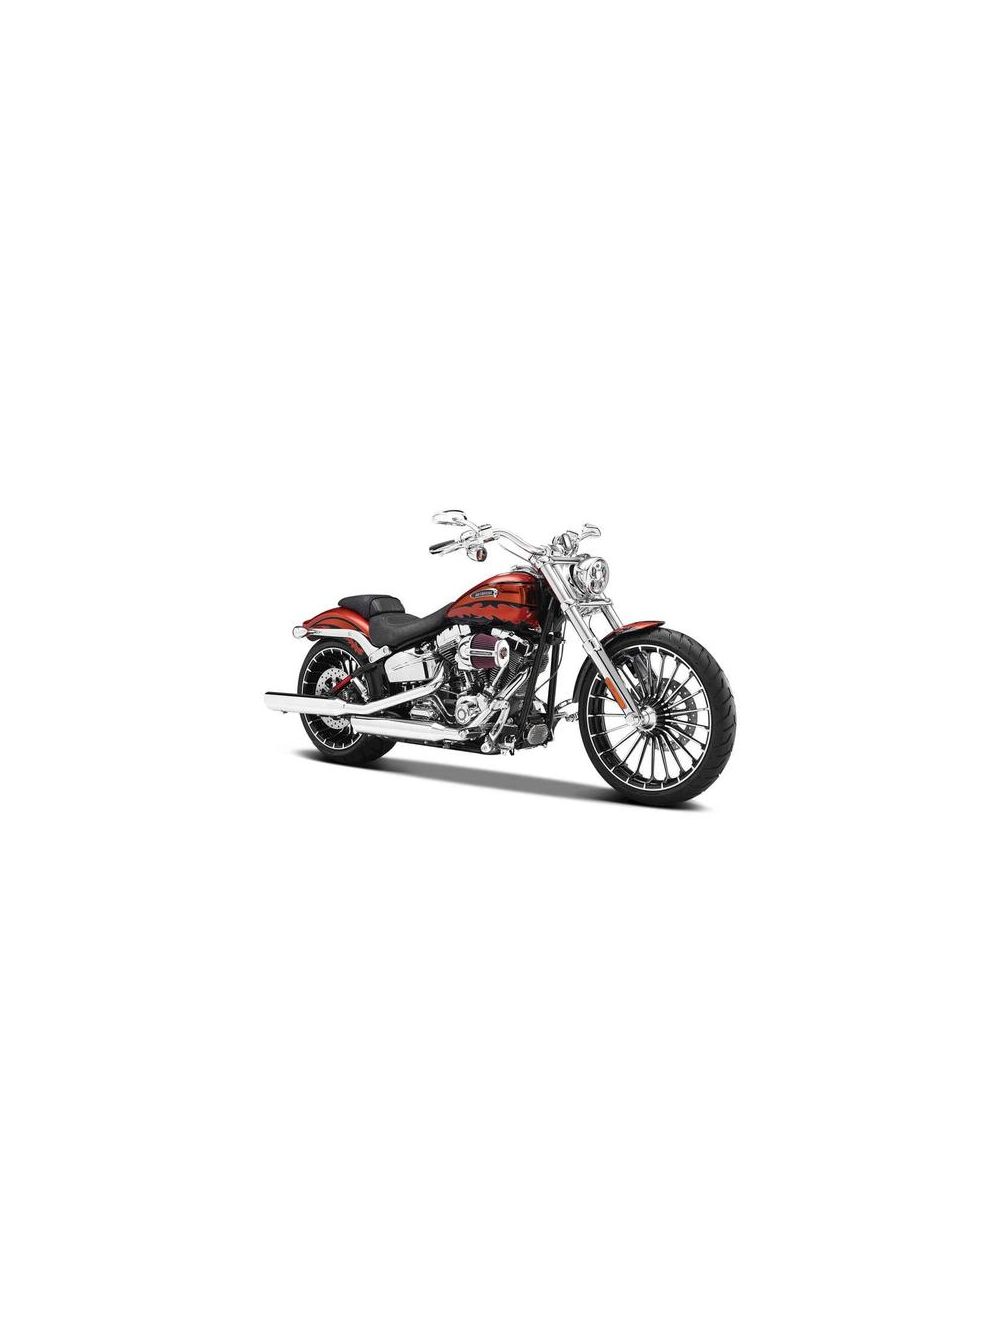 Maisto 1:12 scale Harley Davidson Motorcycle